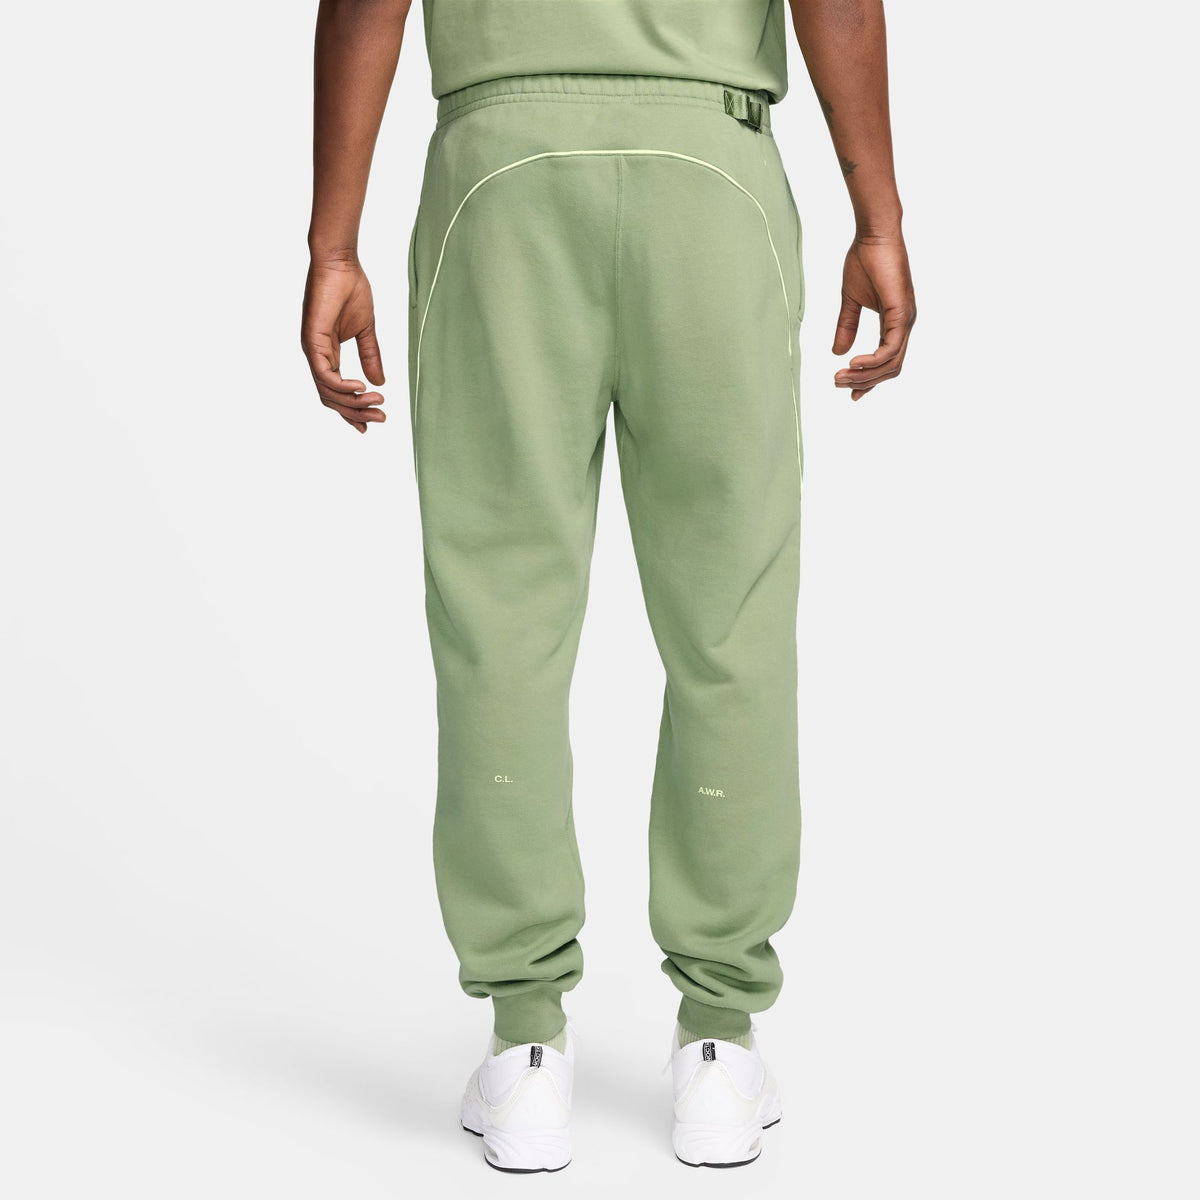 Nike x NOCTA NRG Pants "Oil Green"